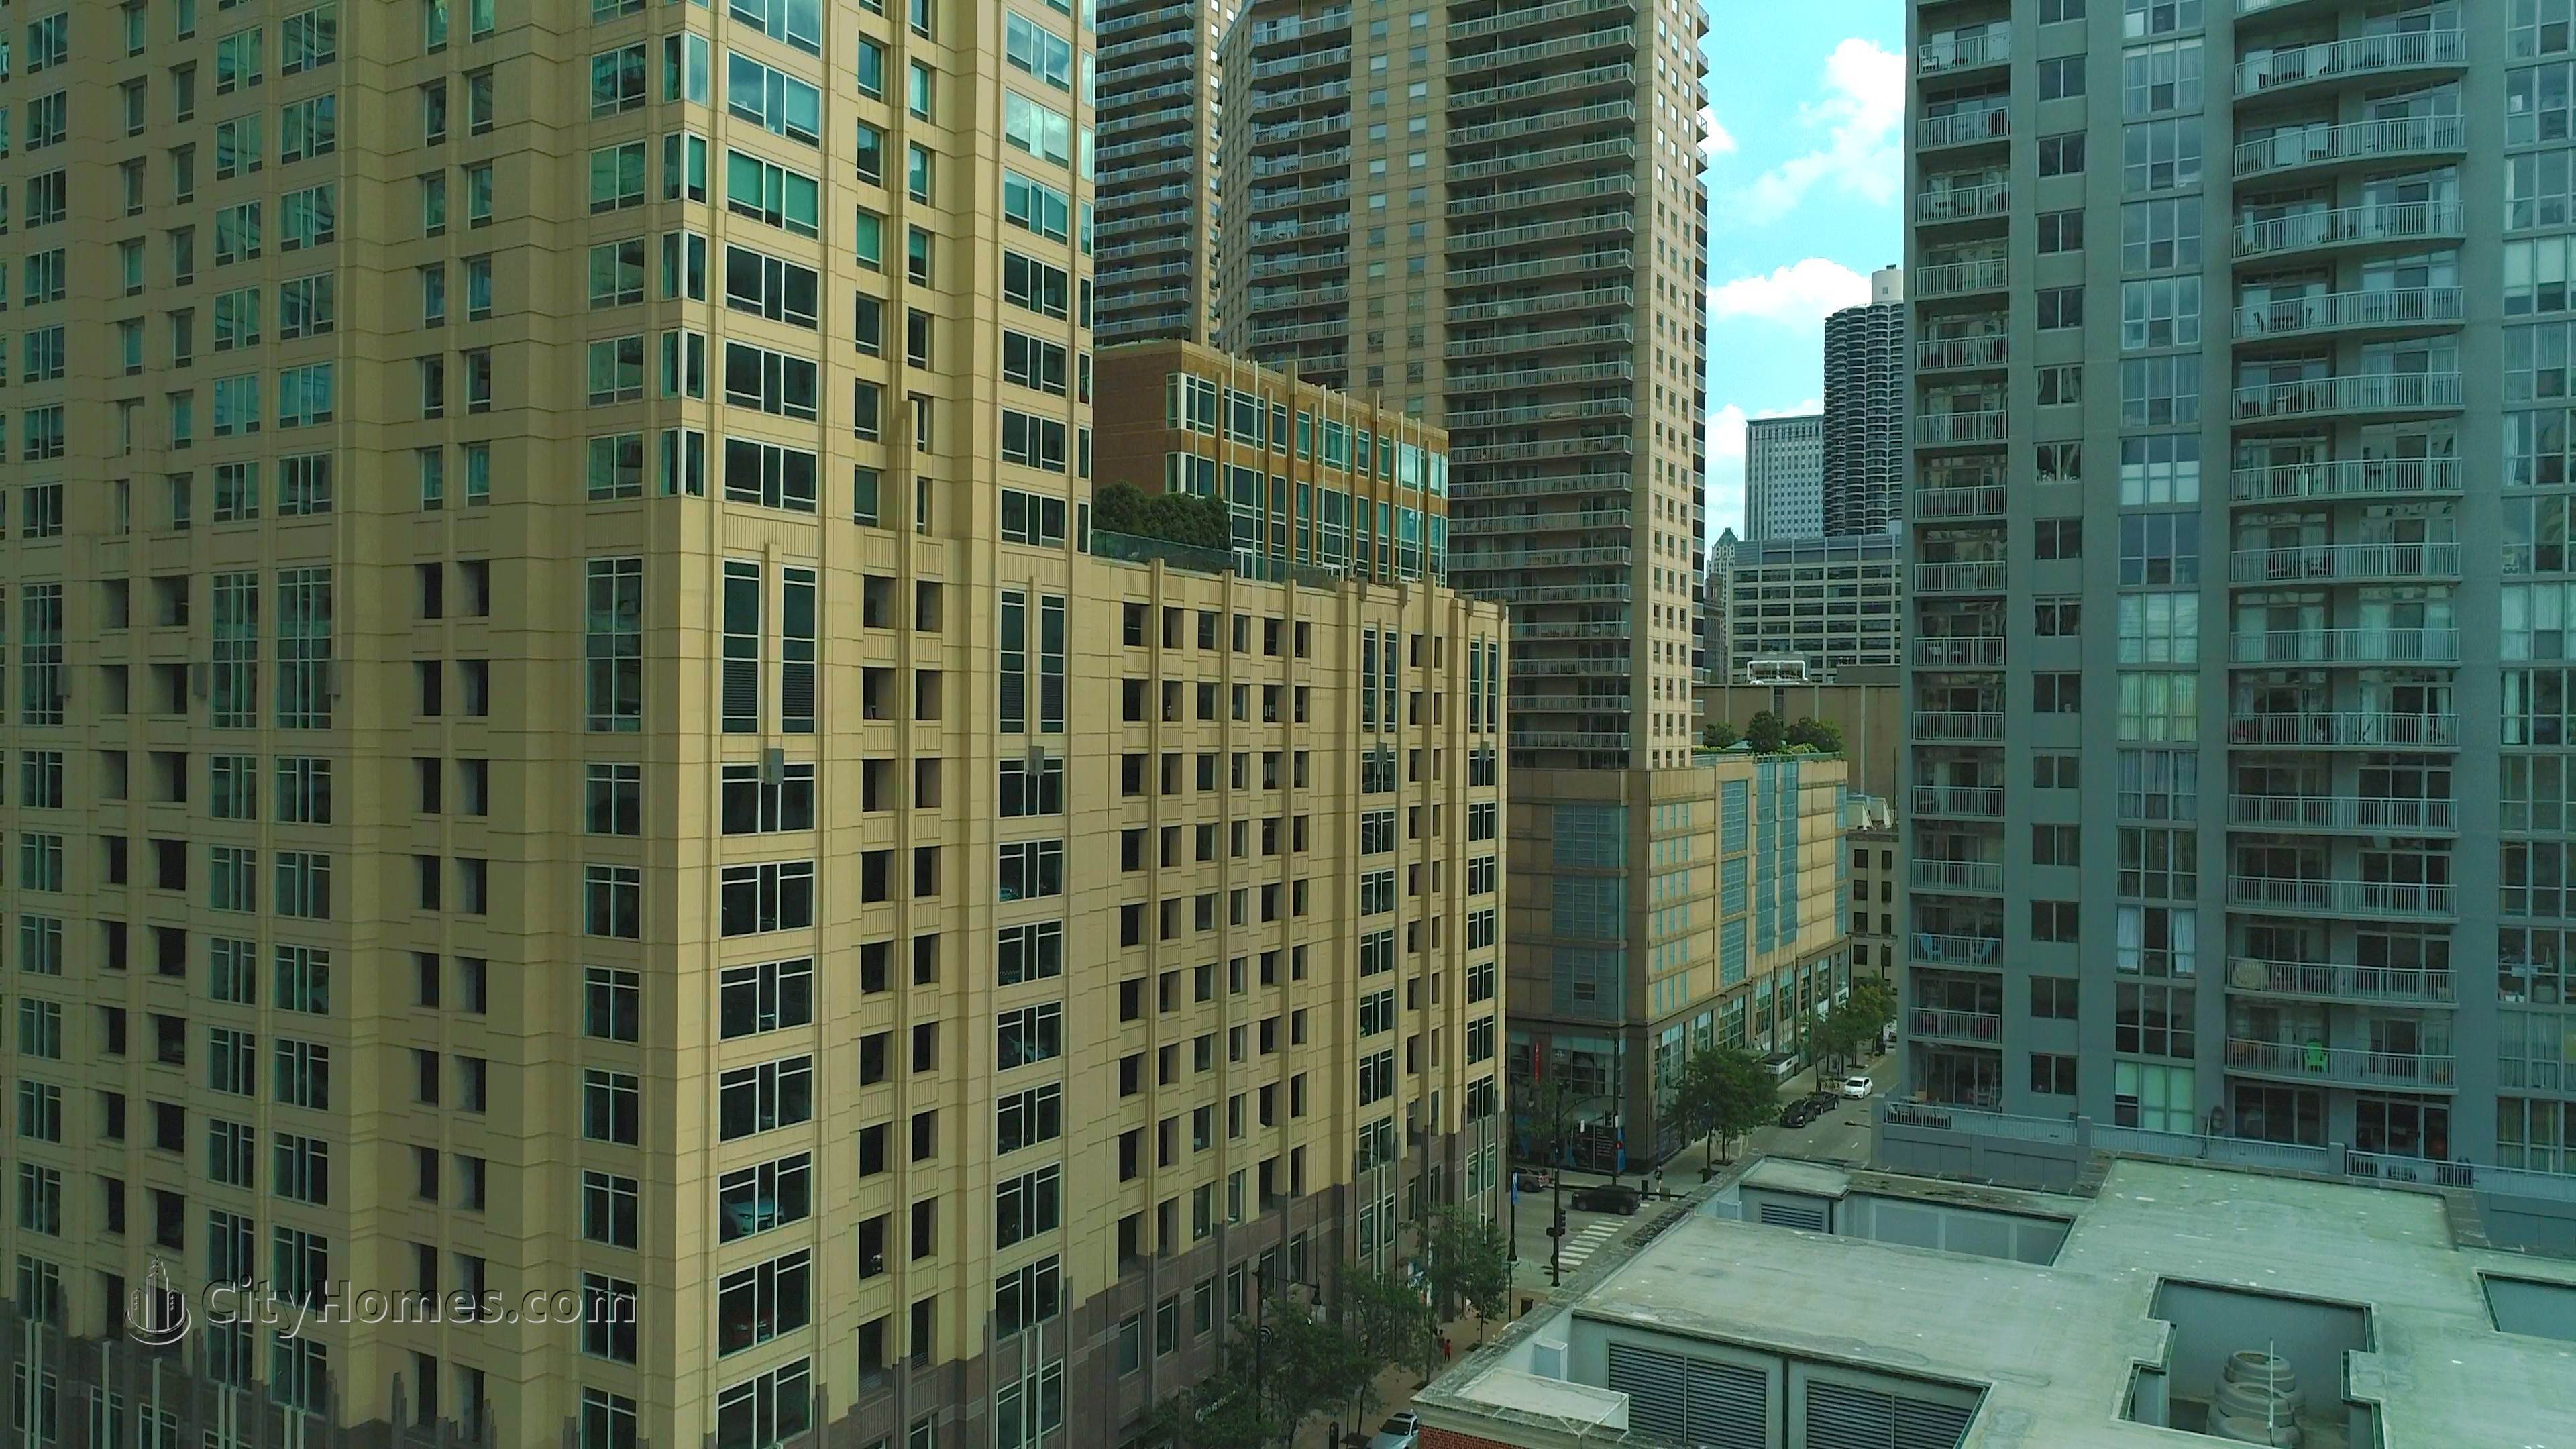 33 W Ontario St, Central Chicago, 시카고, IL 60610에 Millennium Centre 건물